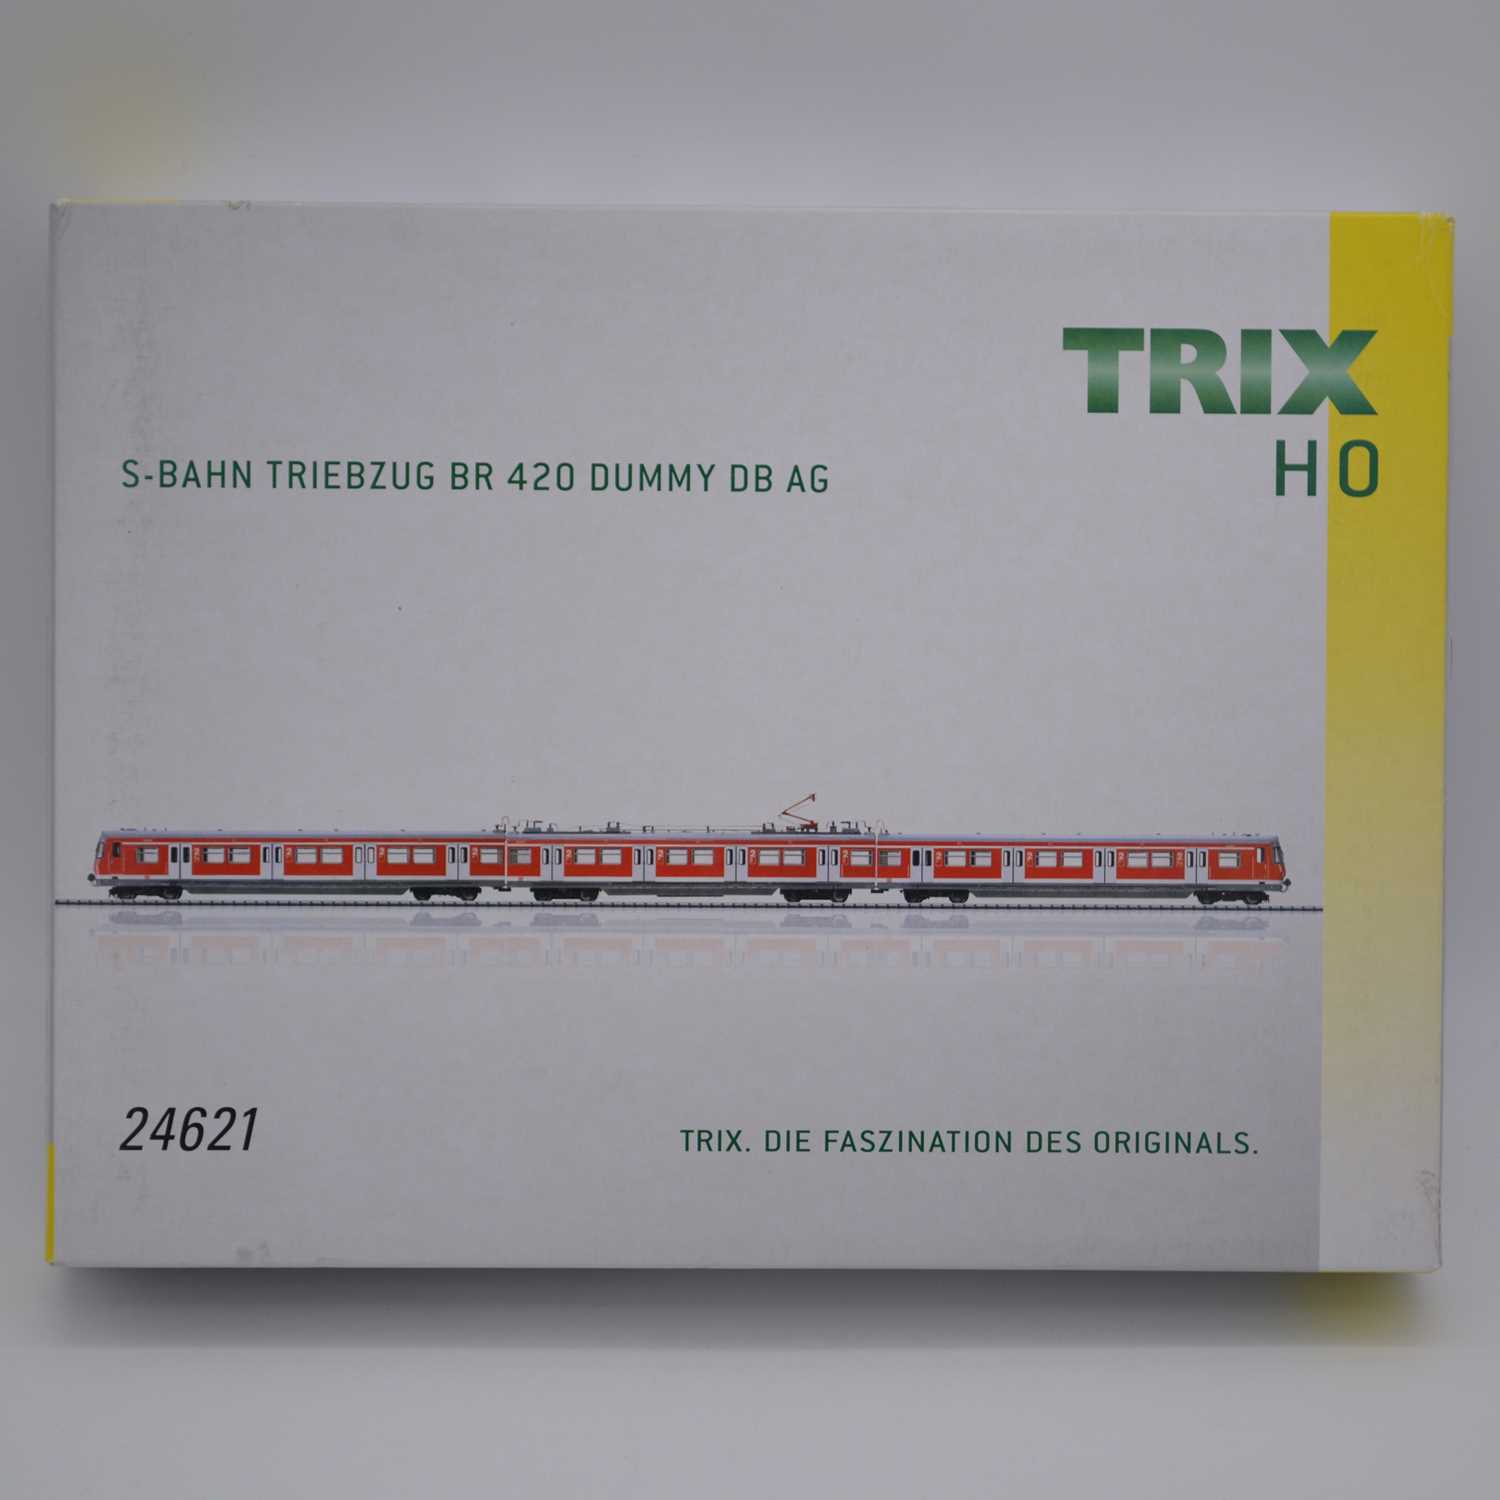 Lot 60 - Trix HO model railways set, ref 24621 S-Bah Triebzug BR 420 Dummy DB AG Epoche V